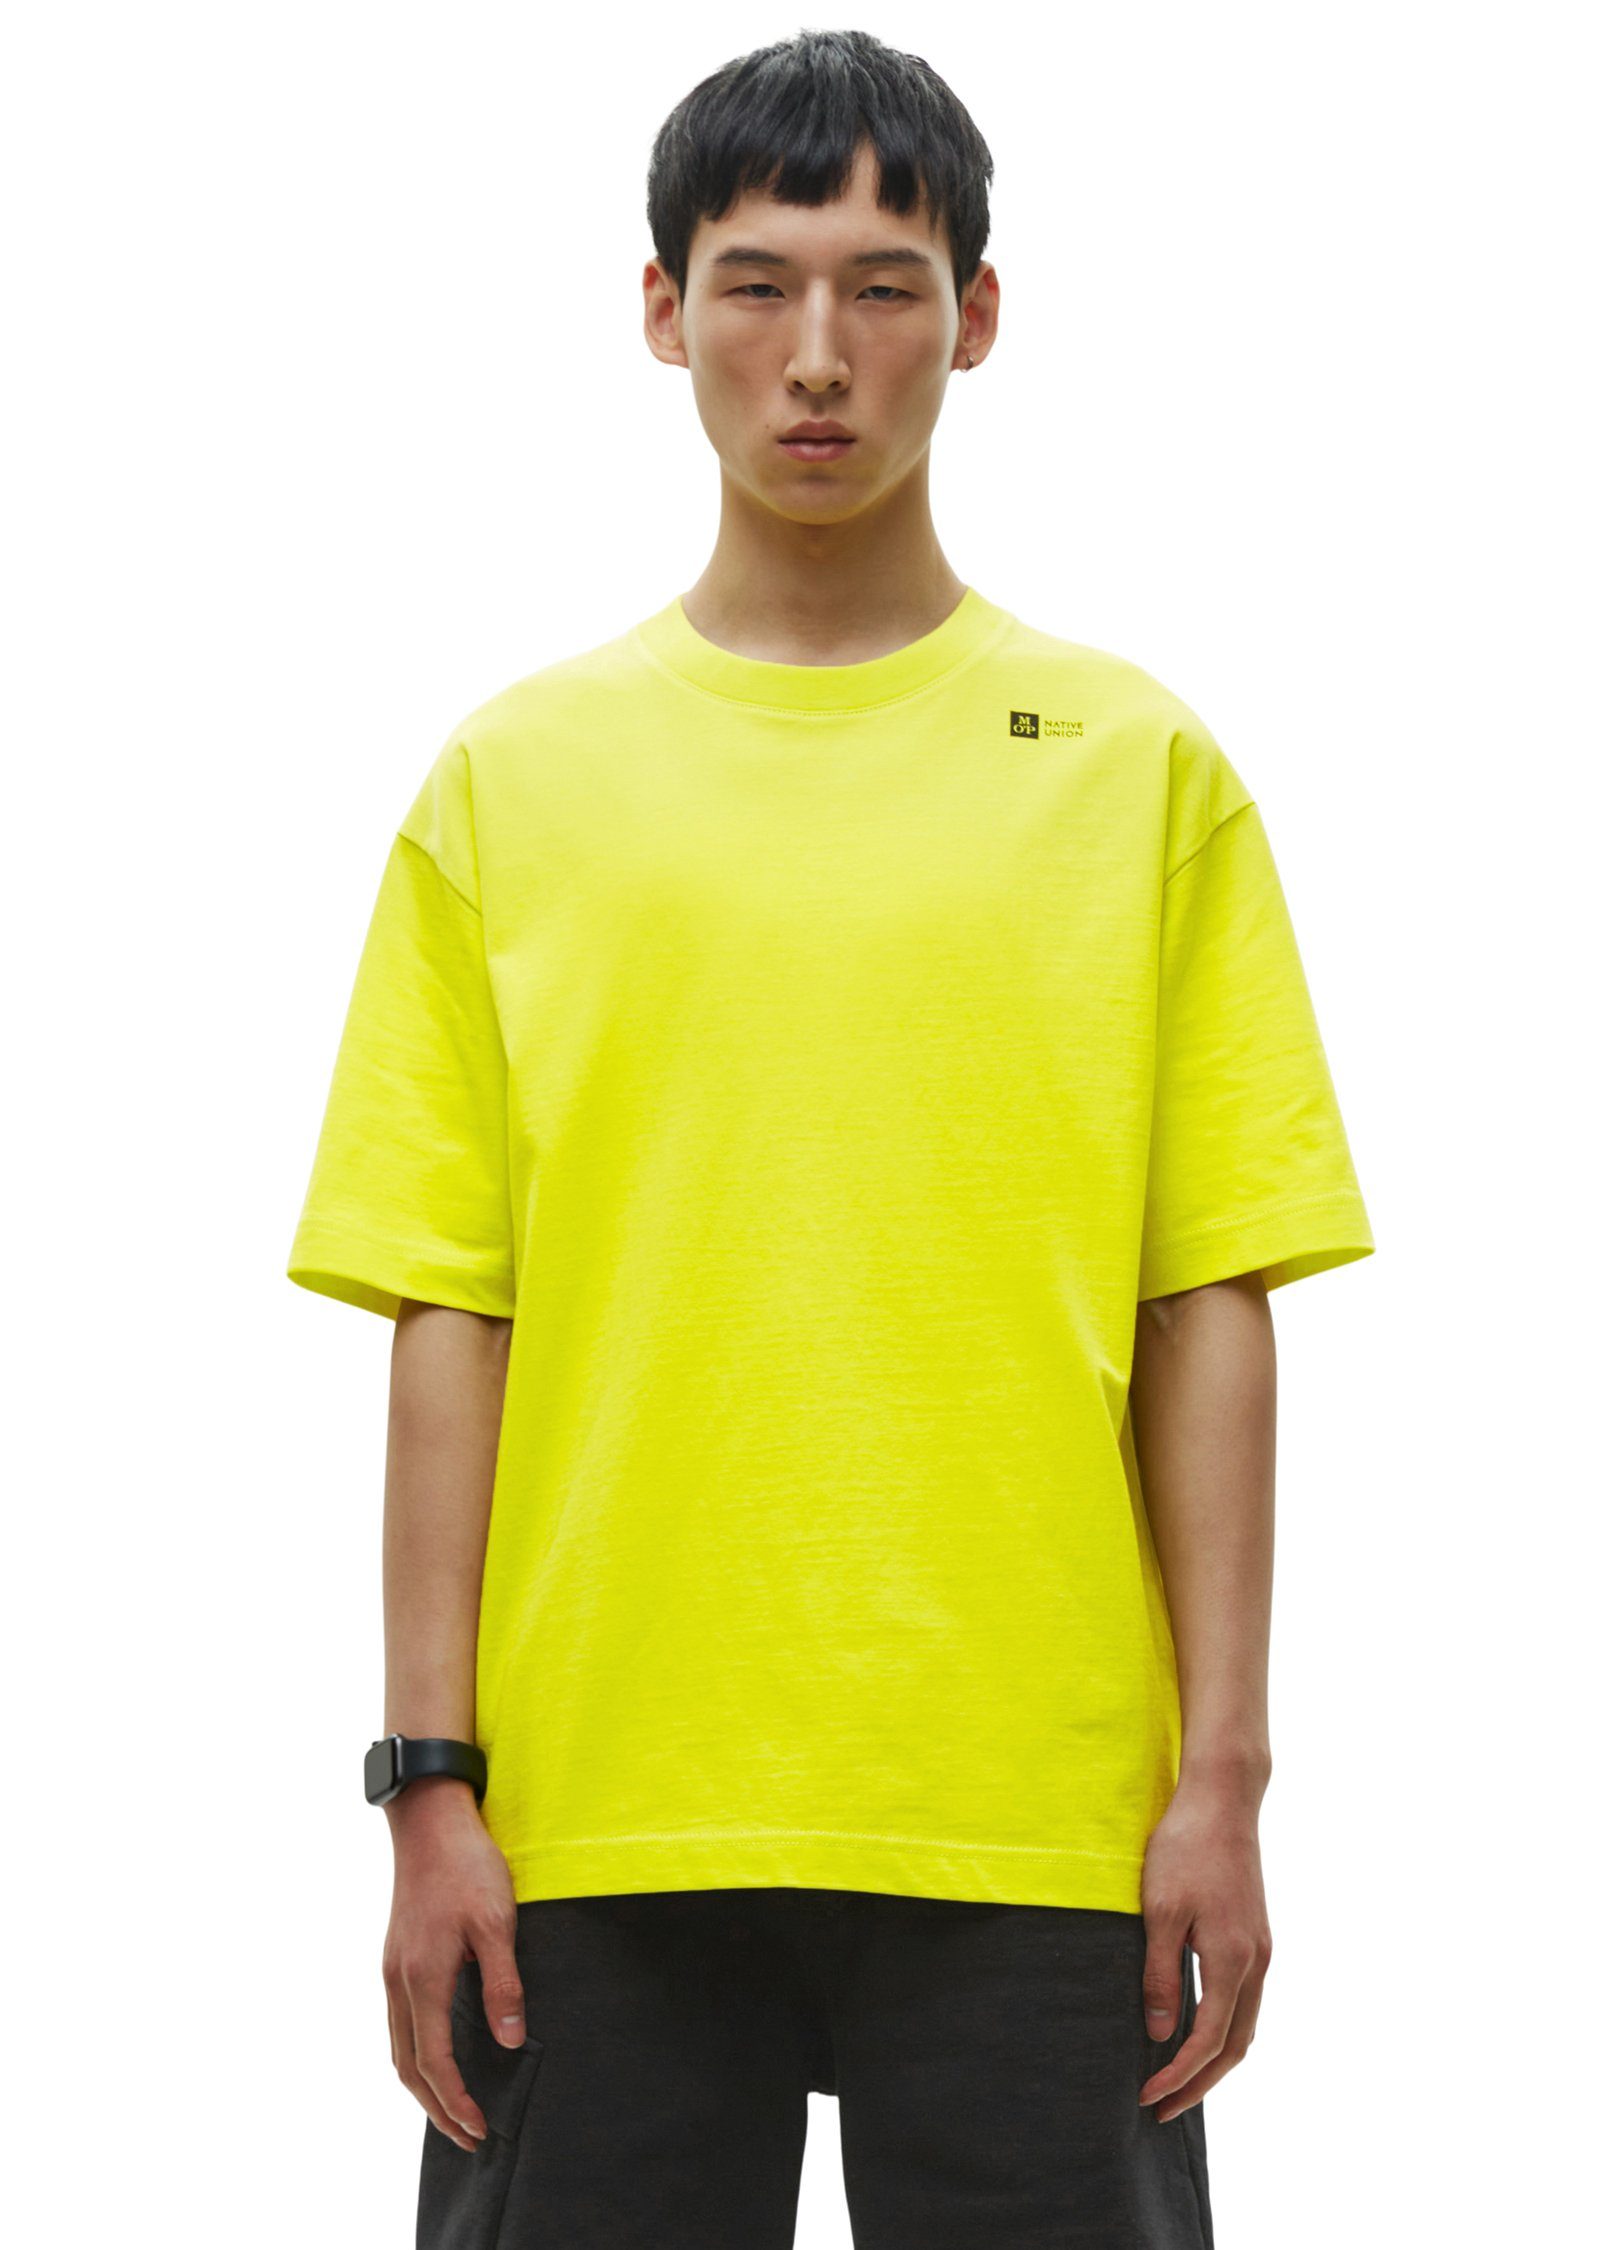 Marc O'Polo T-Shirt mit Logo und Rückenprint gelb